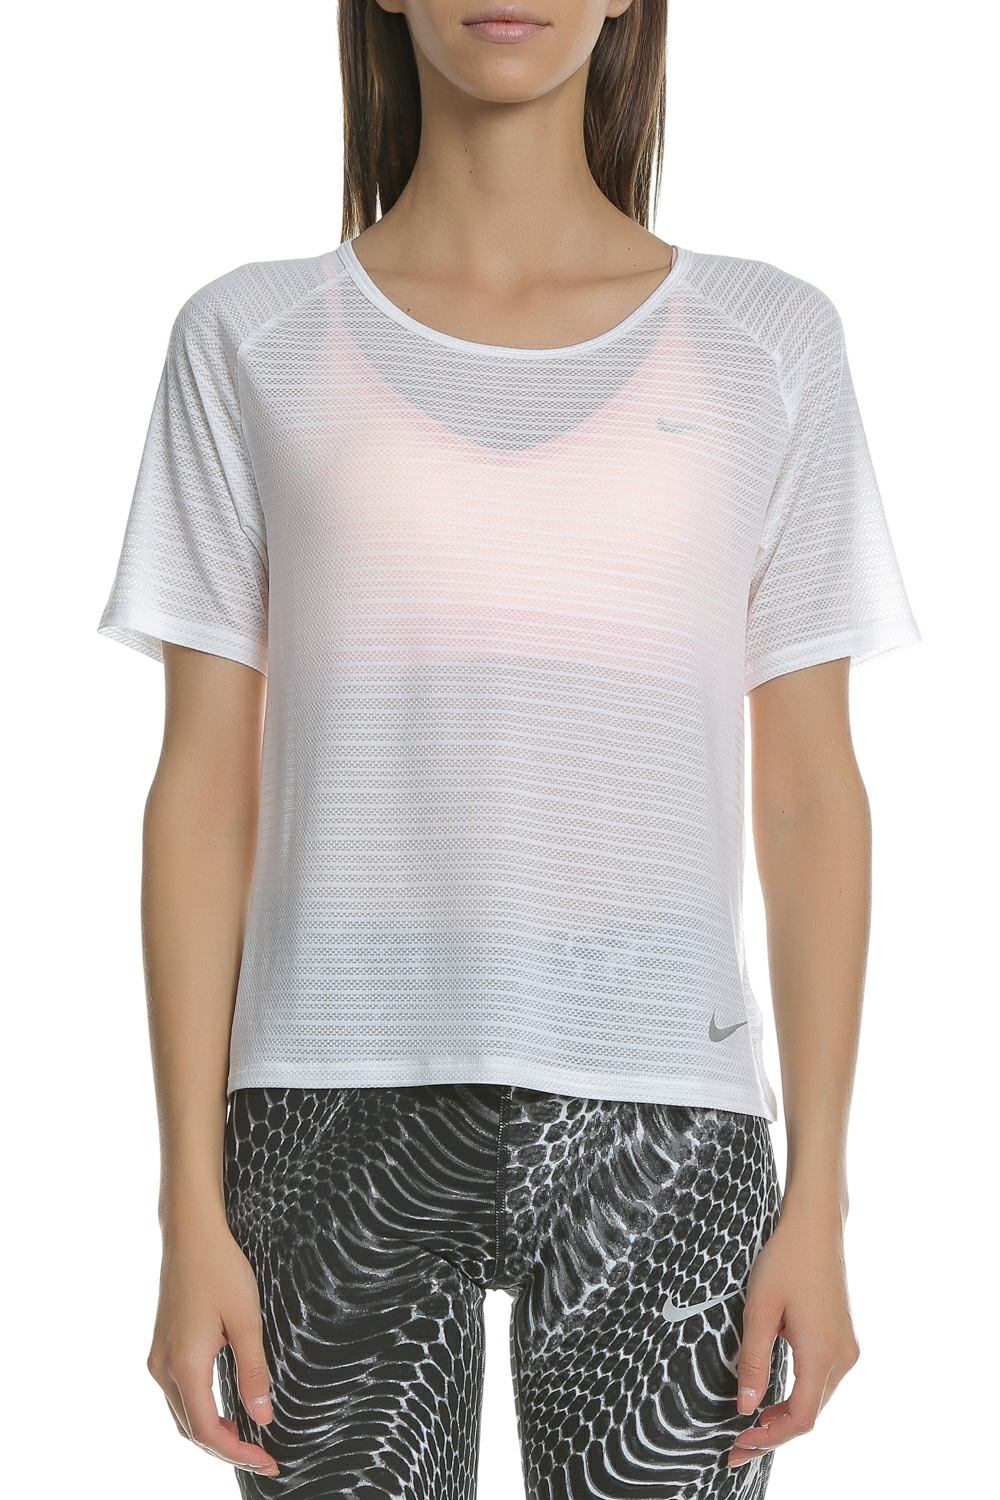 NIKE - Γυναικεία κοντομάνικη μπλούζα NIKE Dry Miler Breathe λευκή Γυναικεία/Ρούχα/Αθλητικά/T-shirt-Τοπ